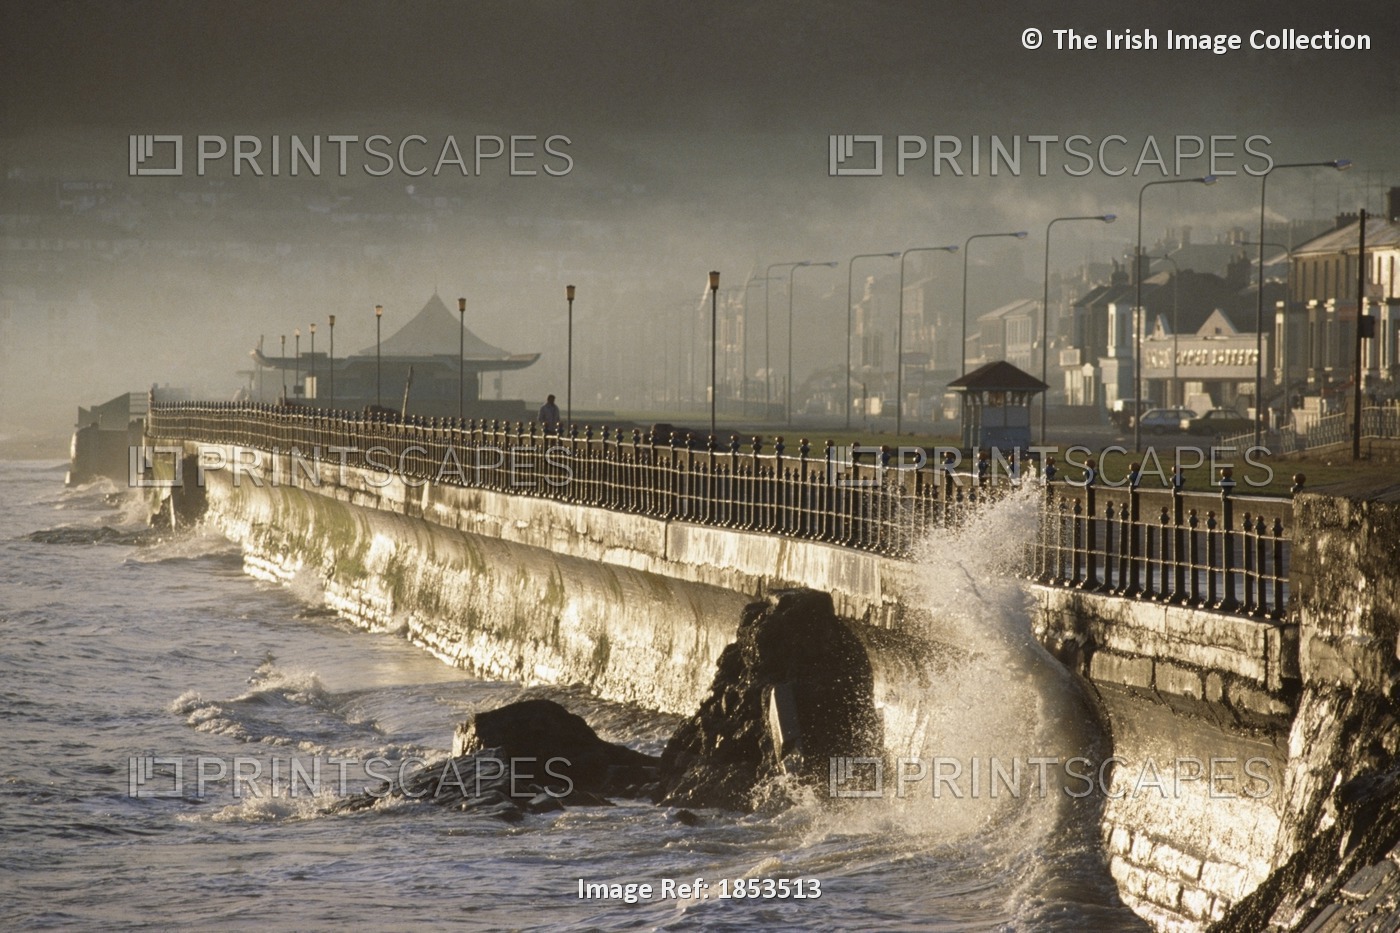 Bray Promenade, Bray, County Wicklow, Ireland